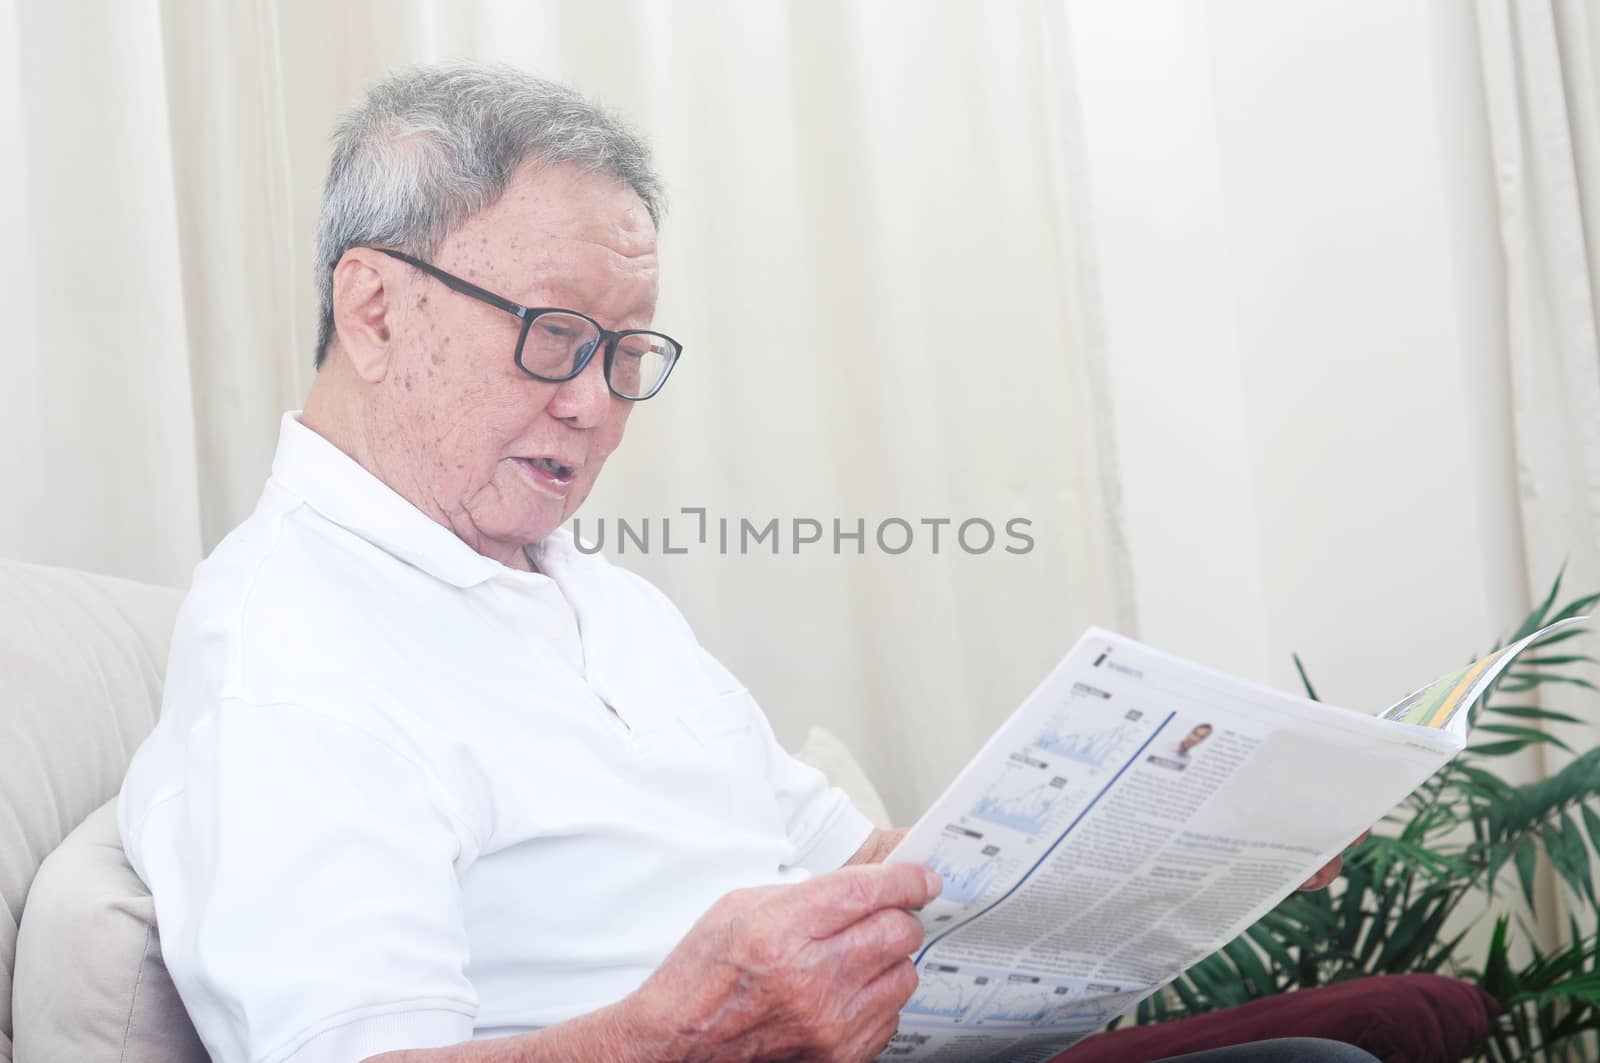 Asian senior man reading newspaper at home